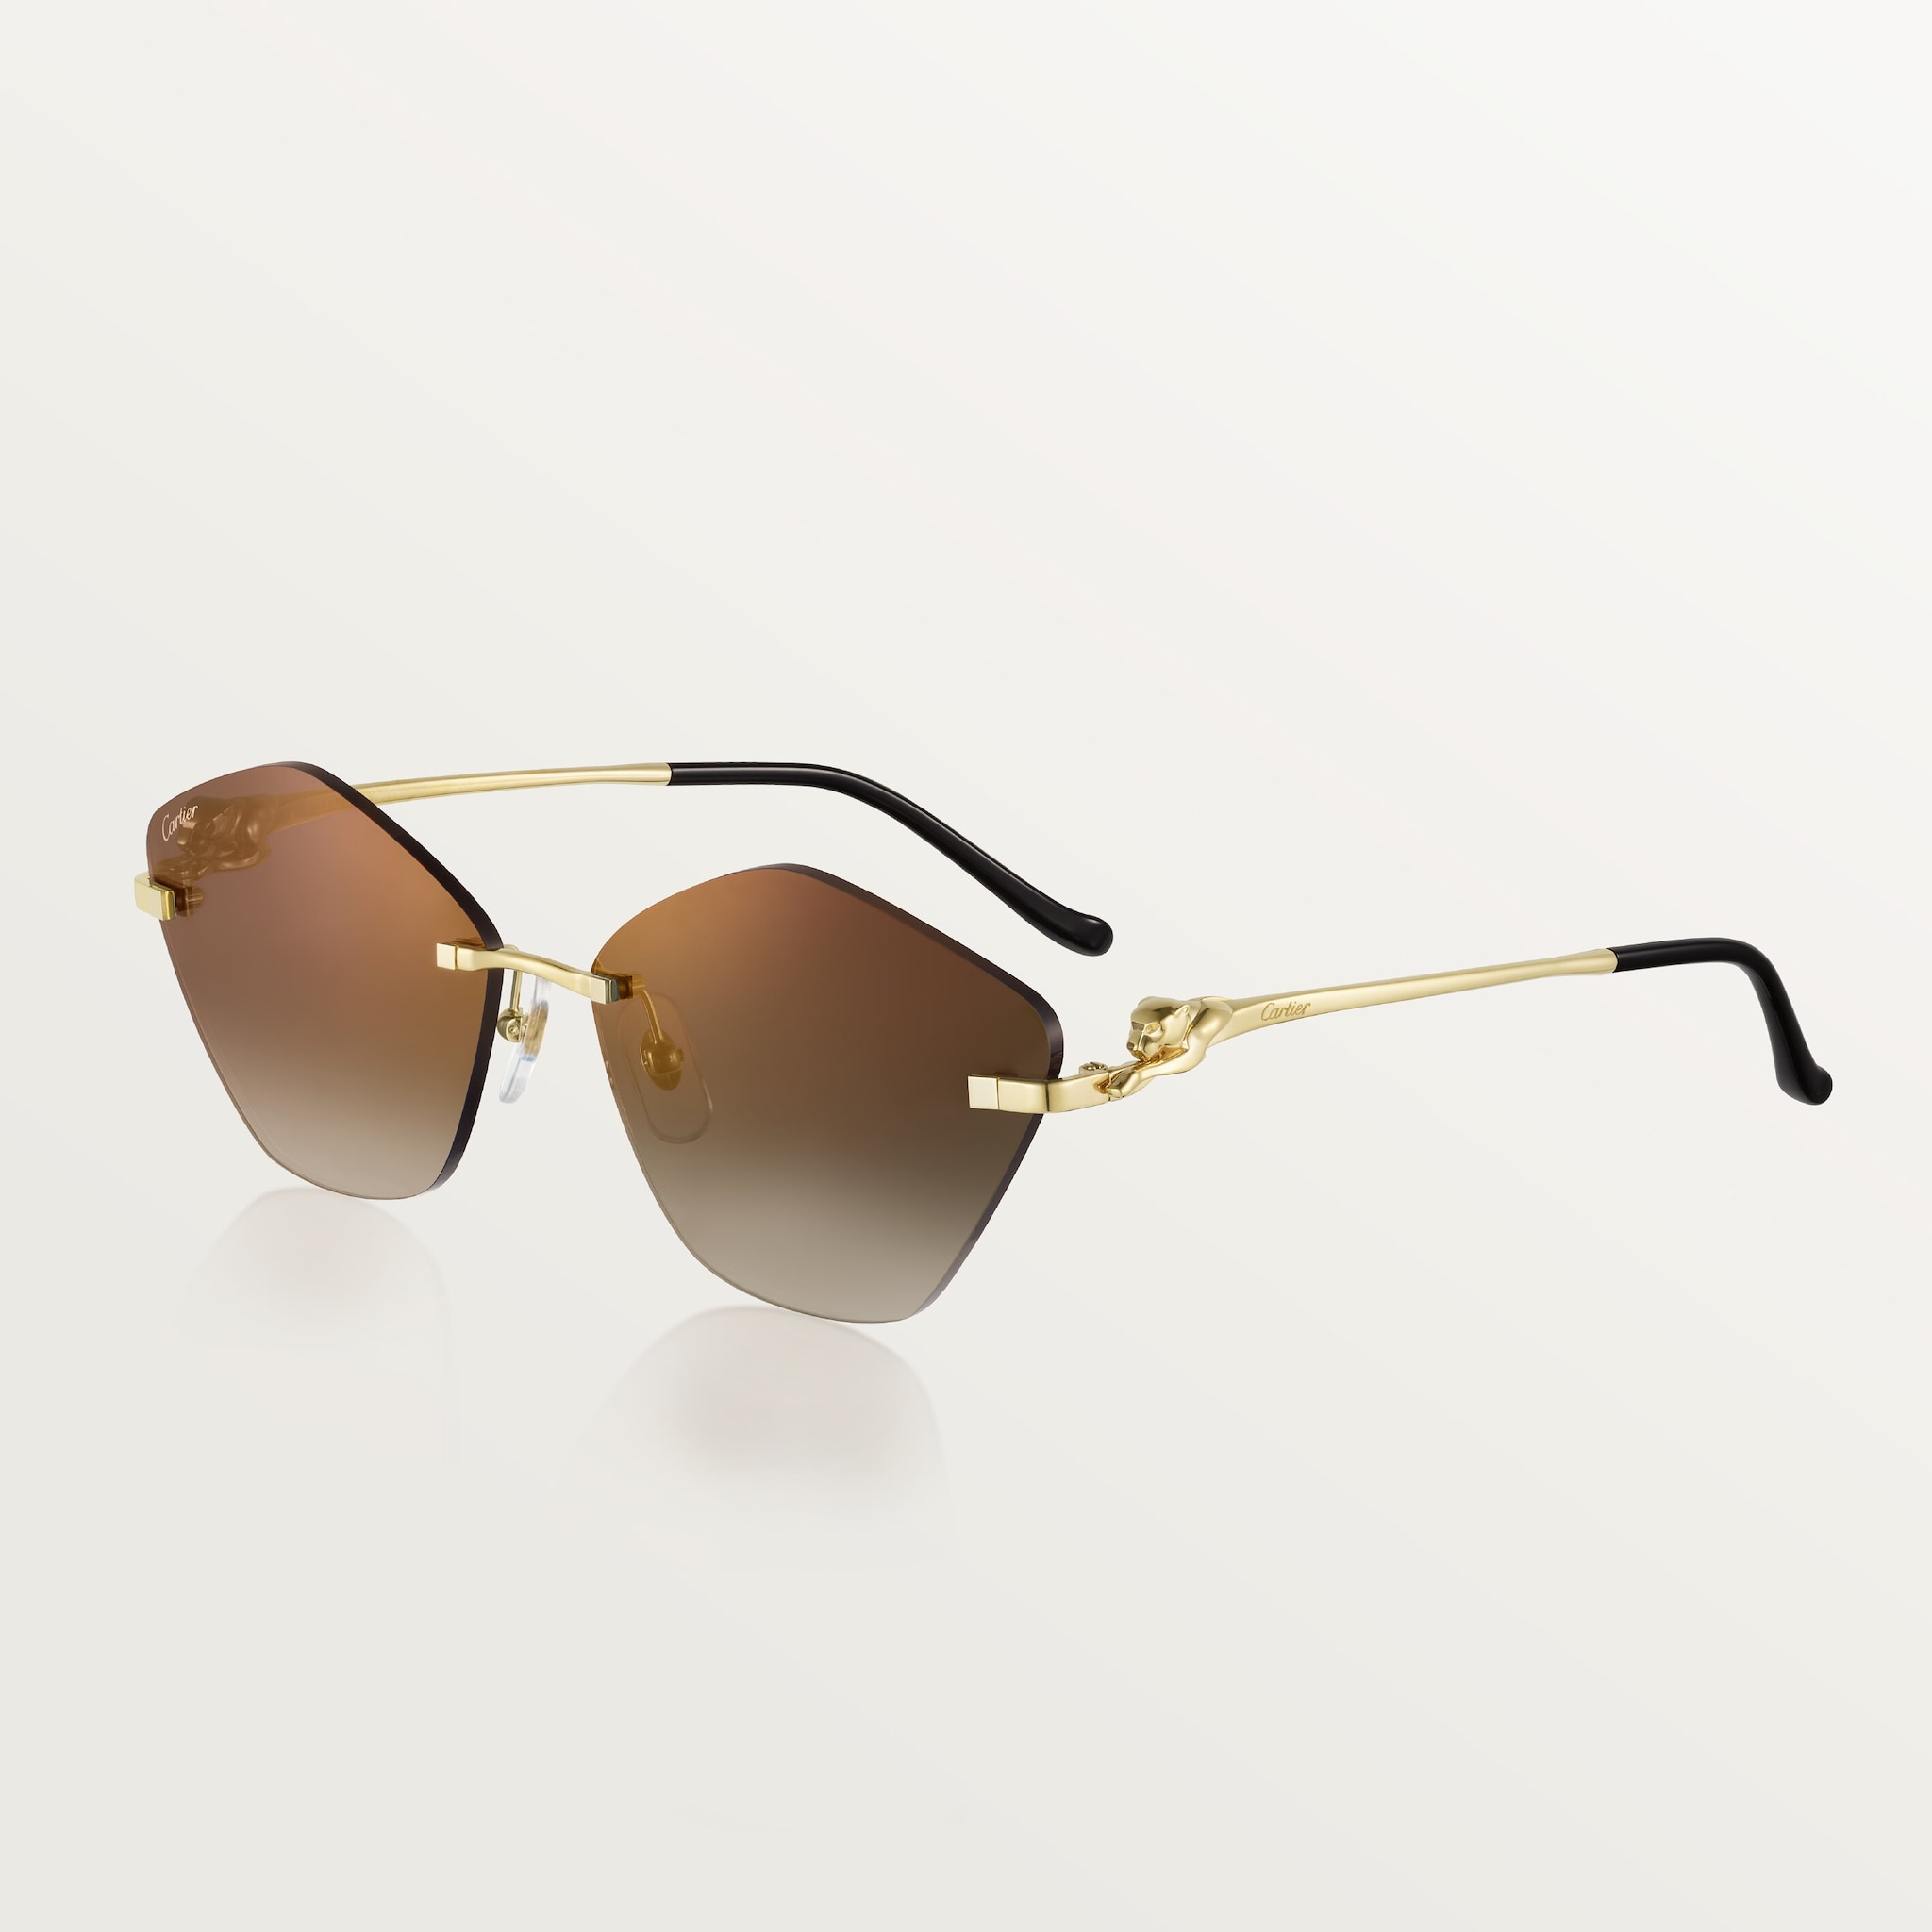 Panthère de Cartier sunglassesSmooth golden-finish metal, graduated brown lenses